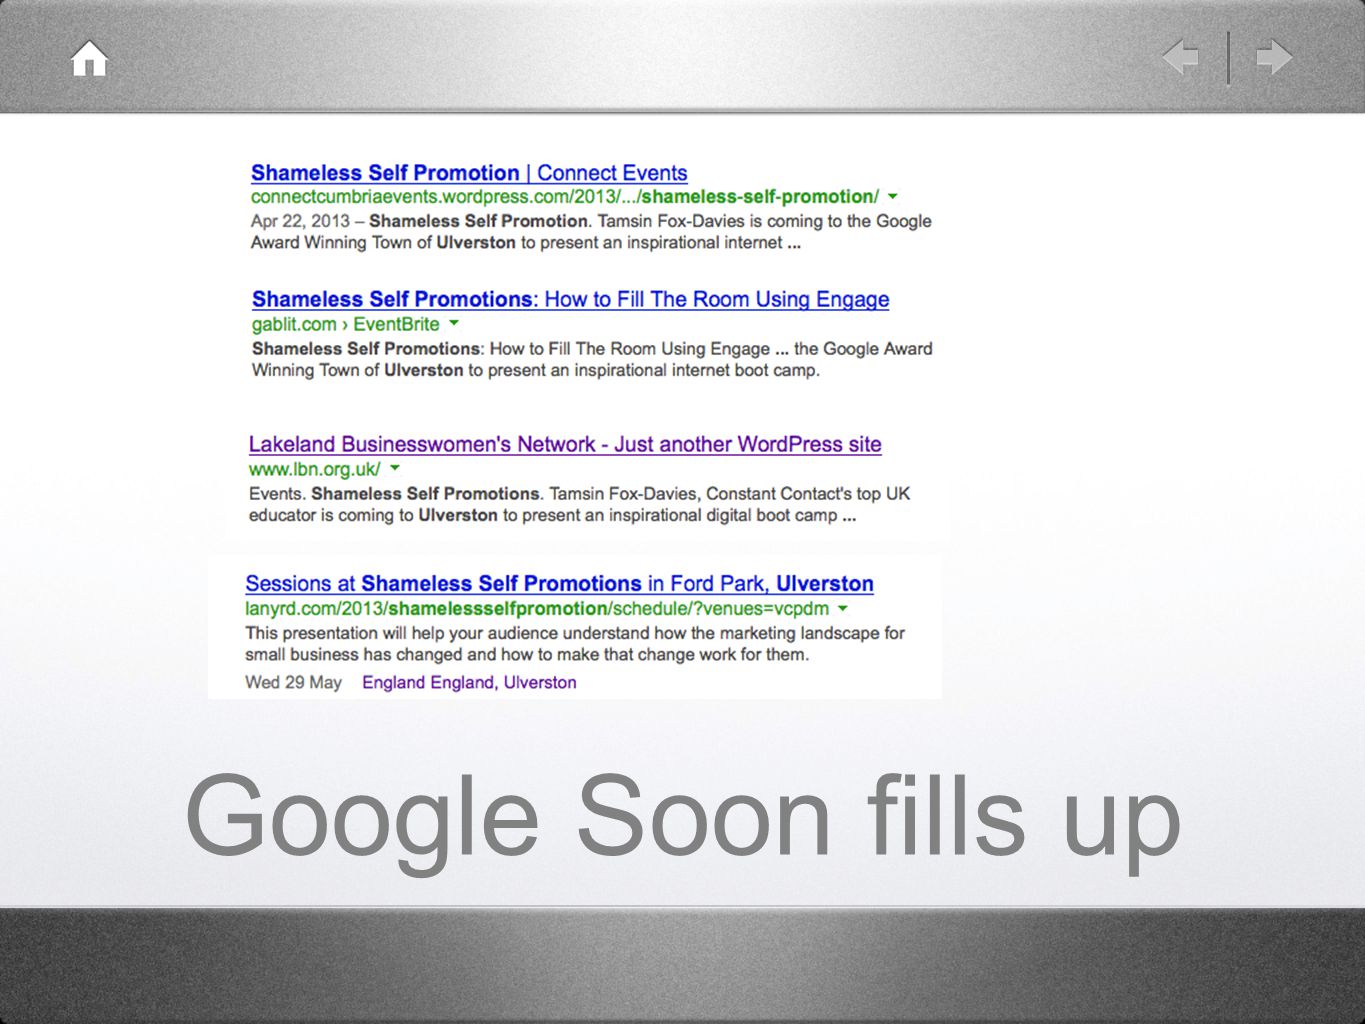 Google Soon fills up